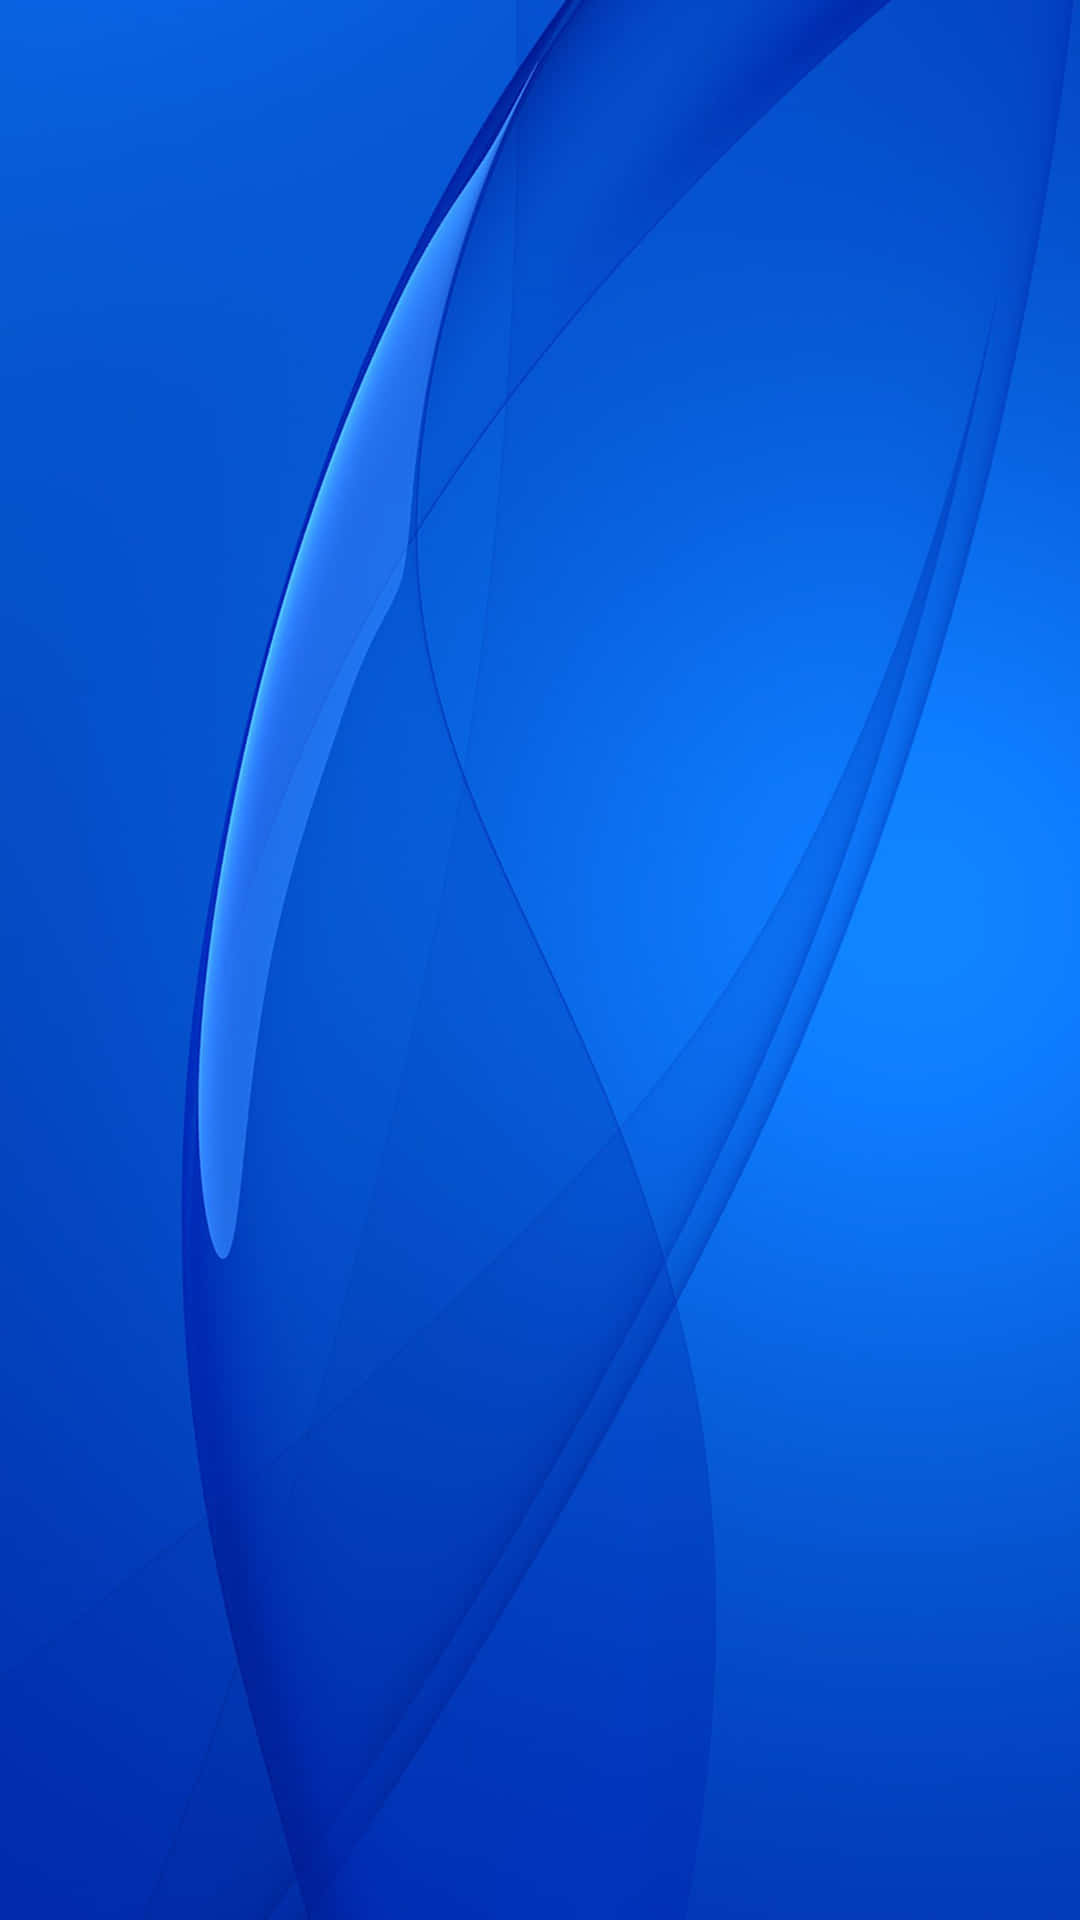 Sleek Blue Smartphone Against A Cool Color-gradient Backdrop Background